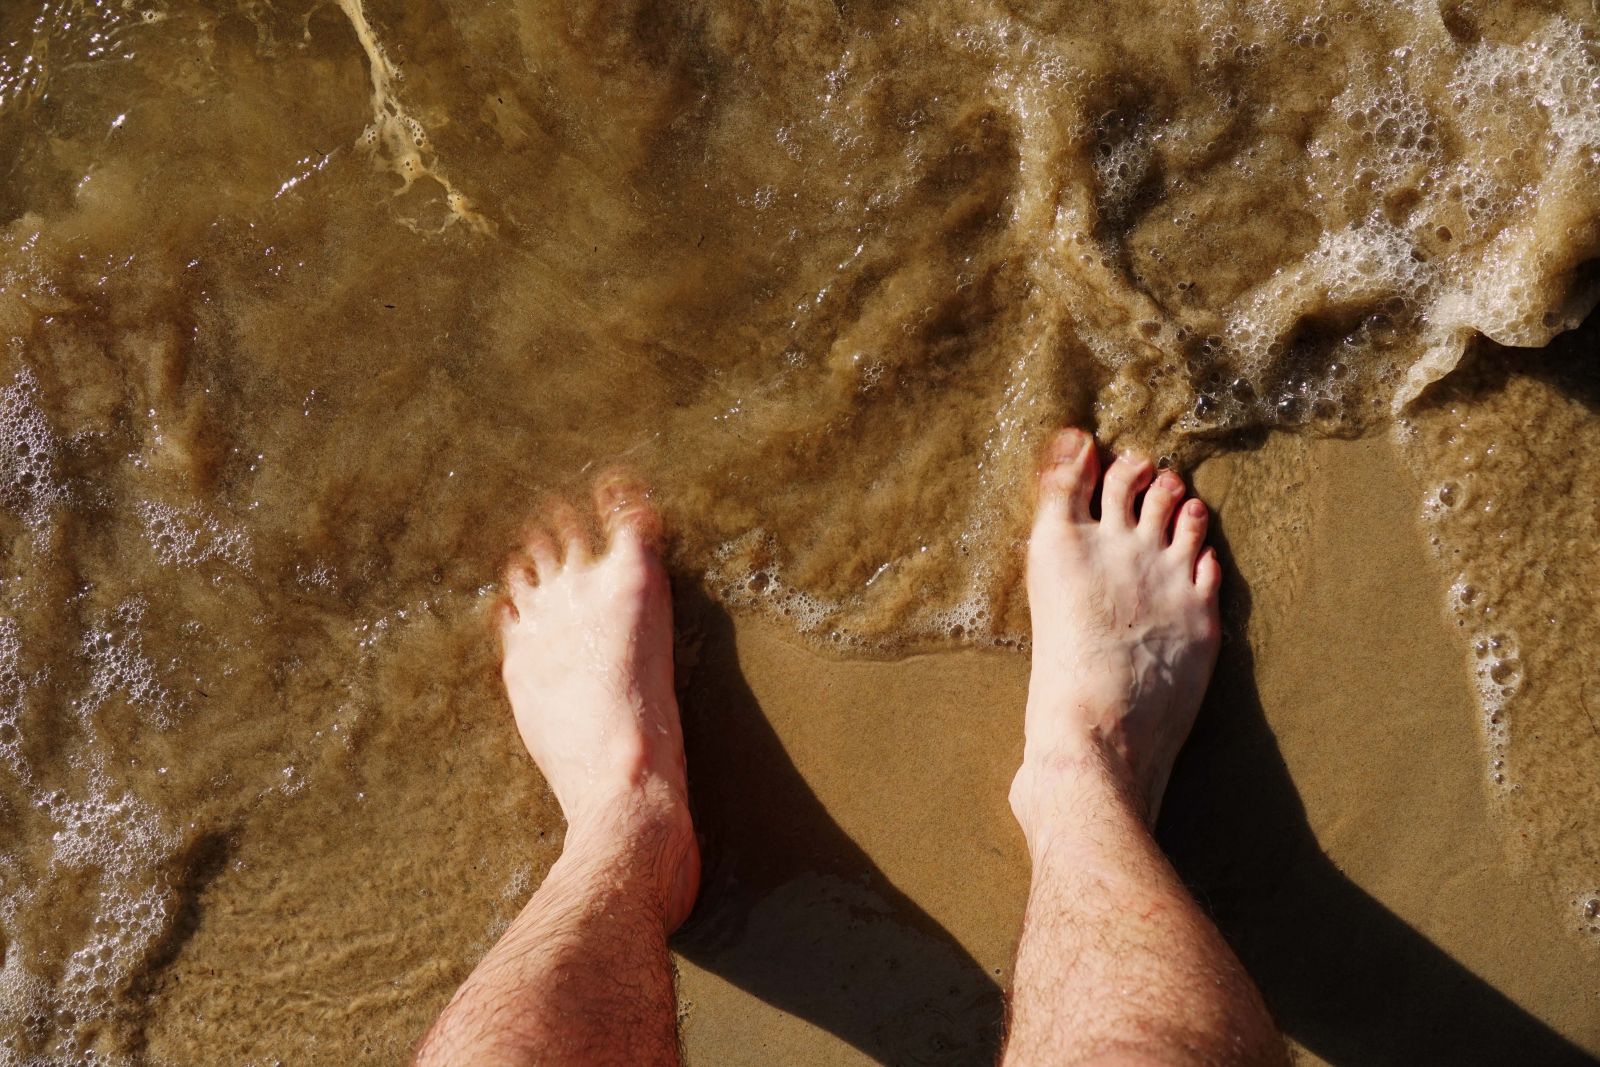 Reid's feet in the ocean